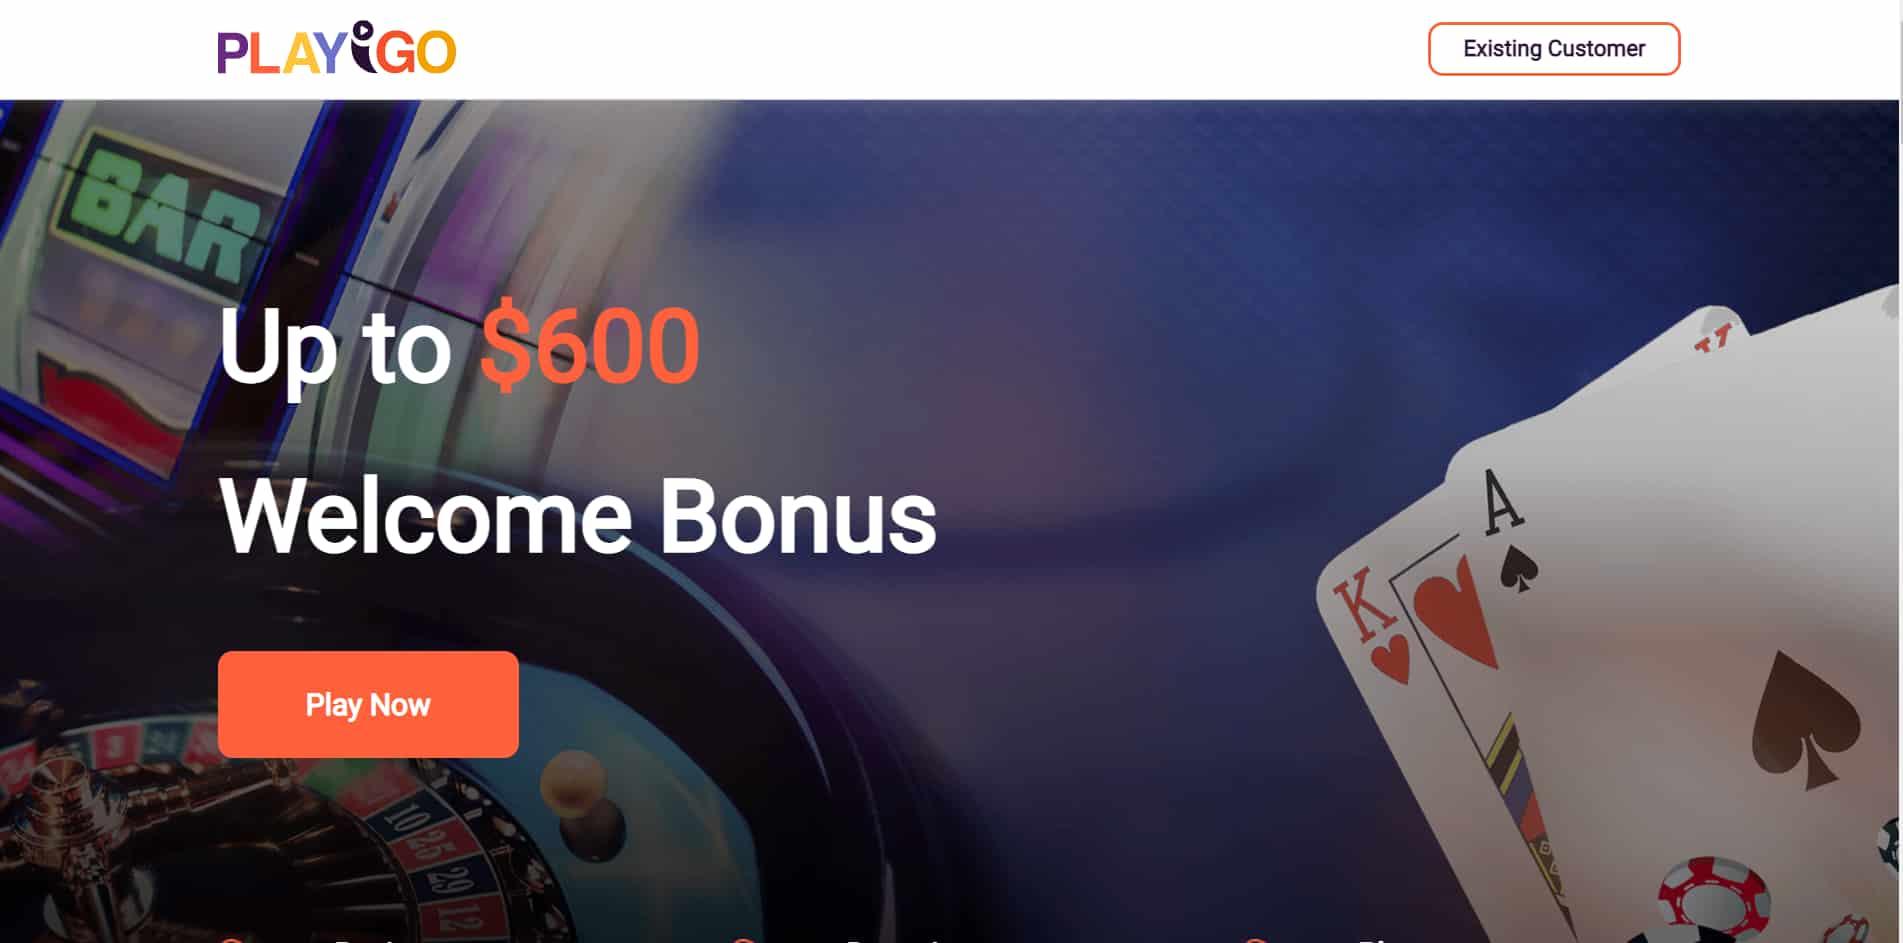 Playigo casino homepage